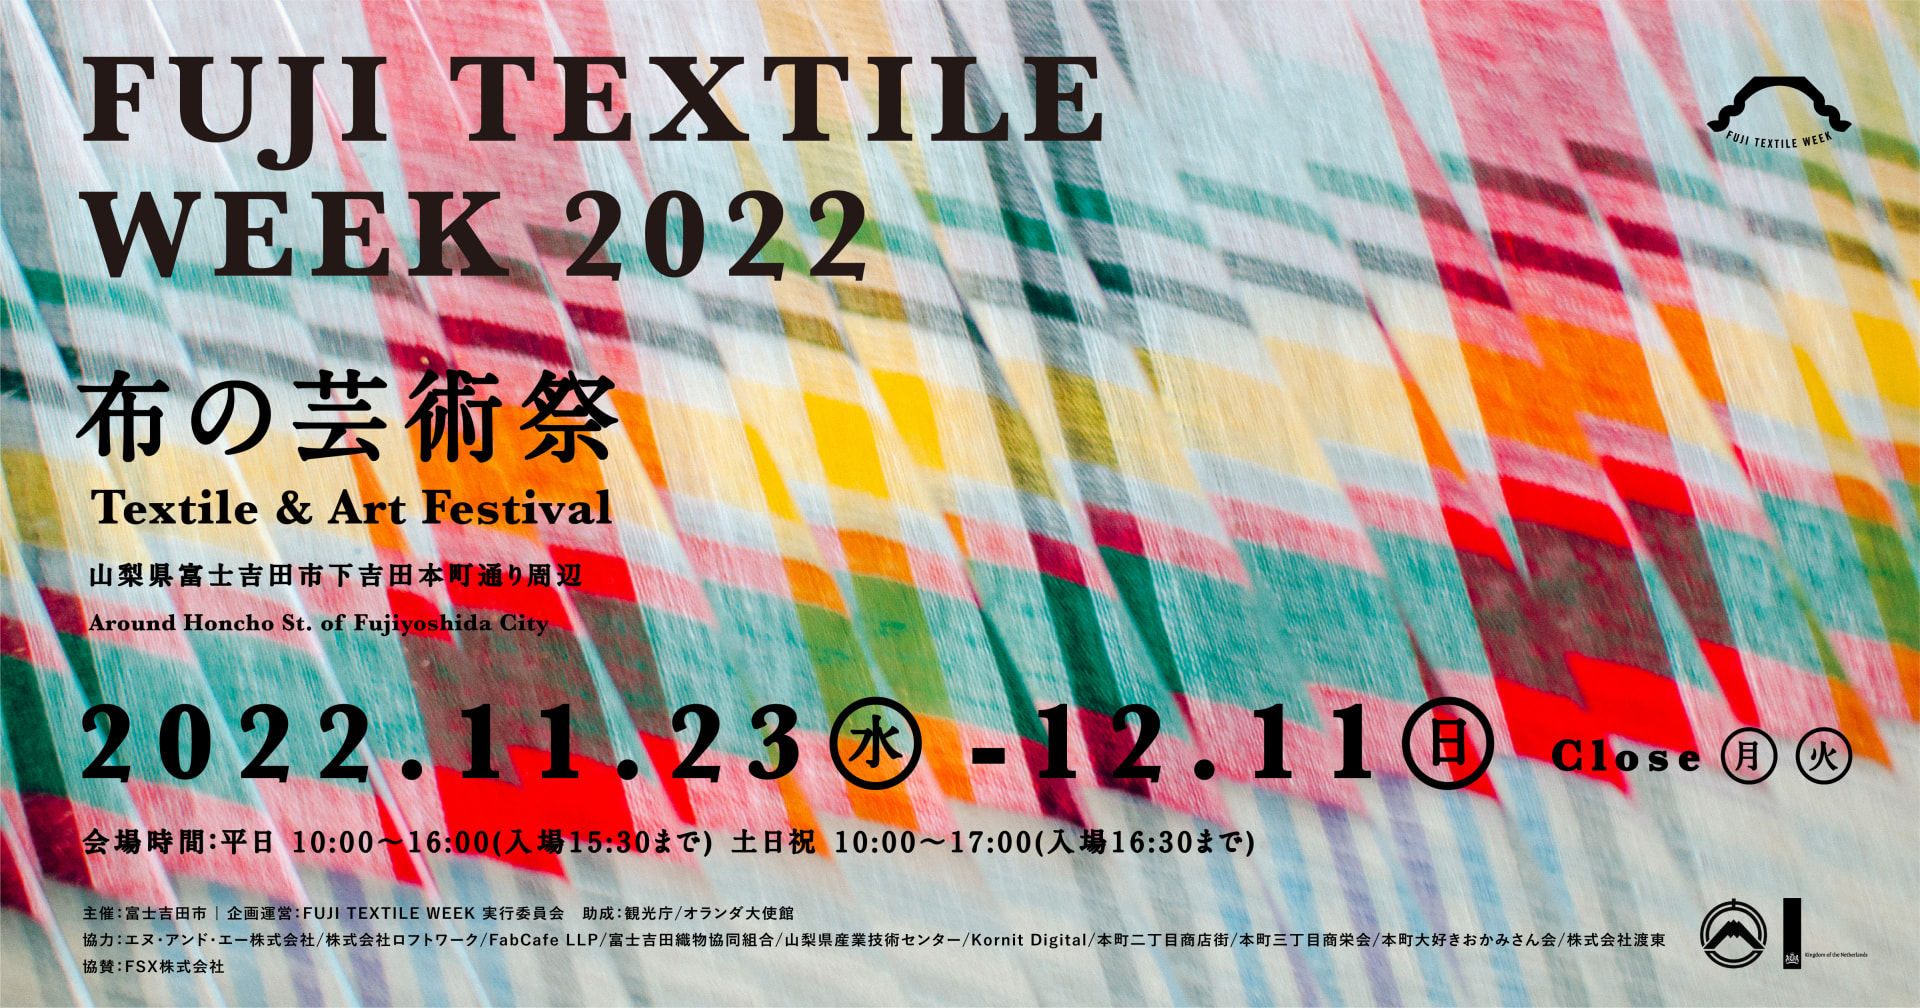 FUJI TEXTILE WEEK 2022」いよいよ開幕 参加アーティストや出展作品が 